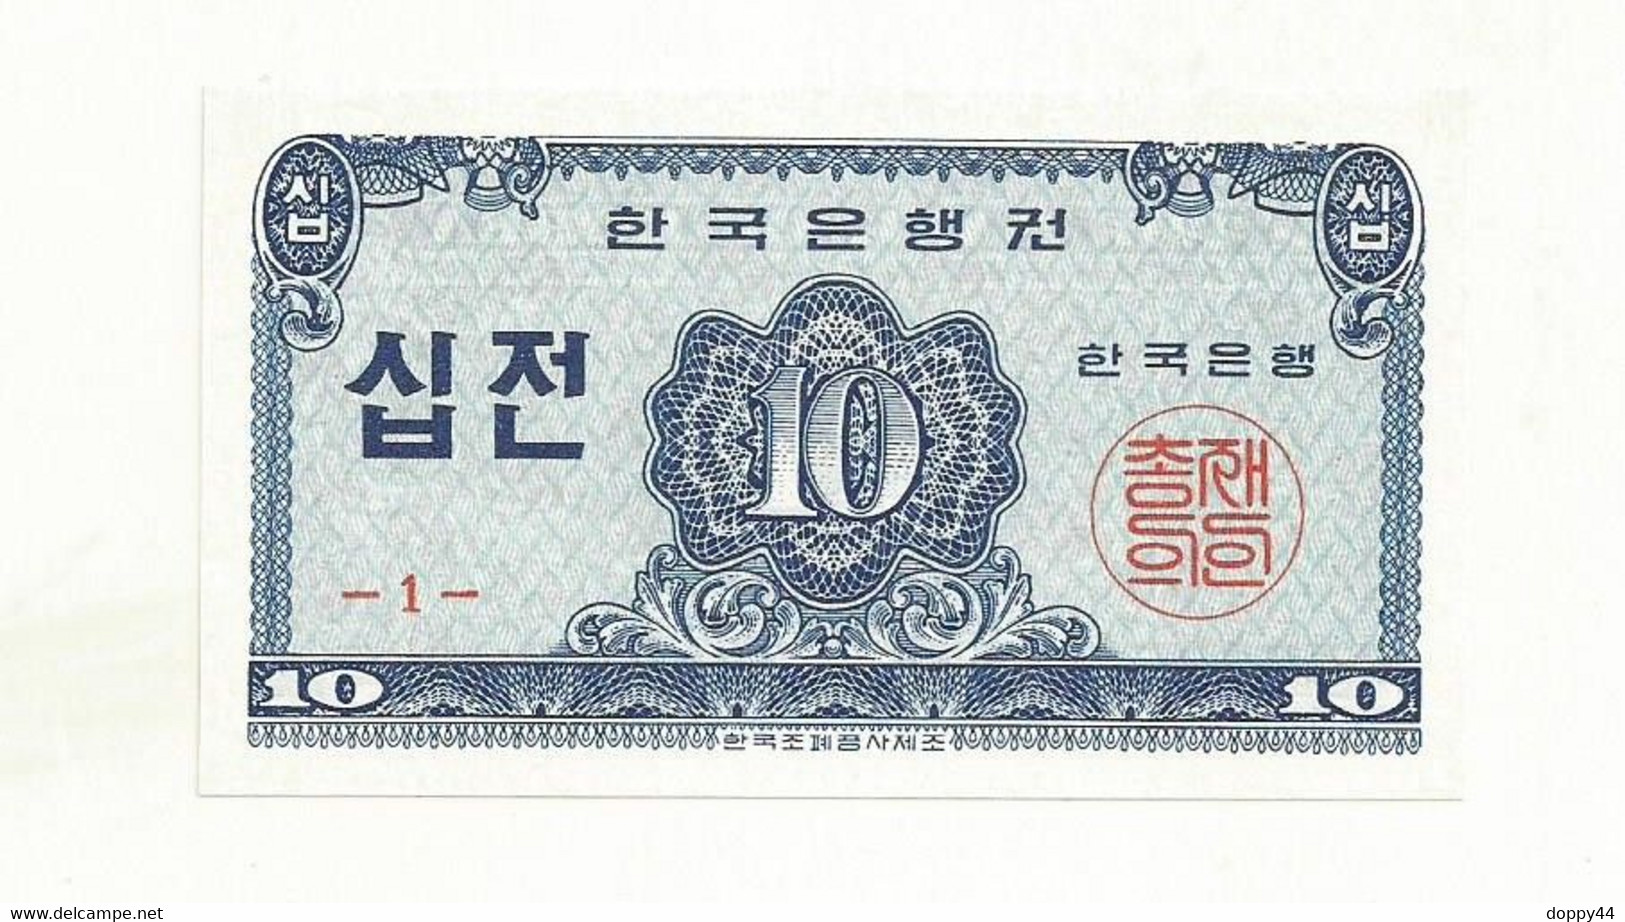 BILLET NEUF COREE EMIS EN 1962 10 JEON. - Korea, South